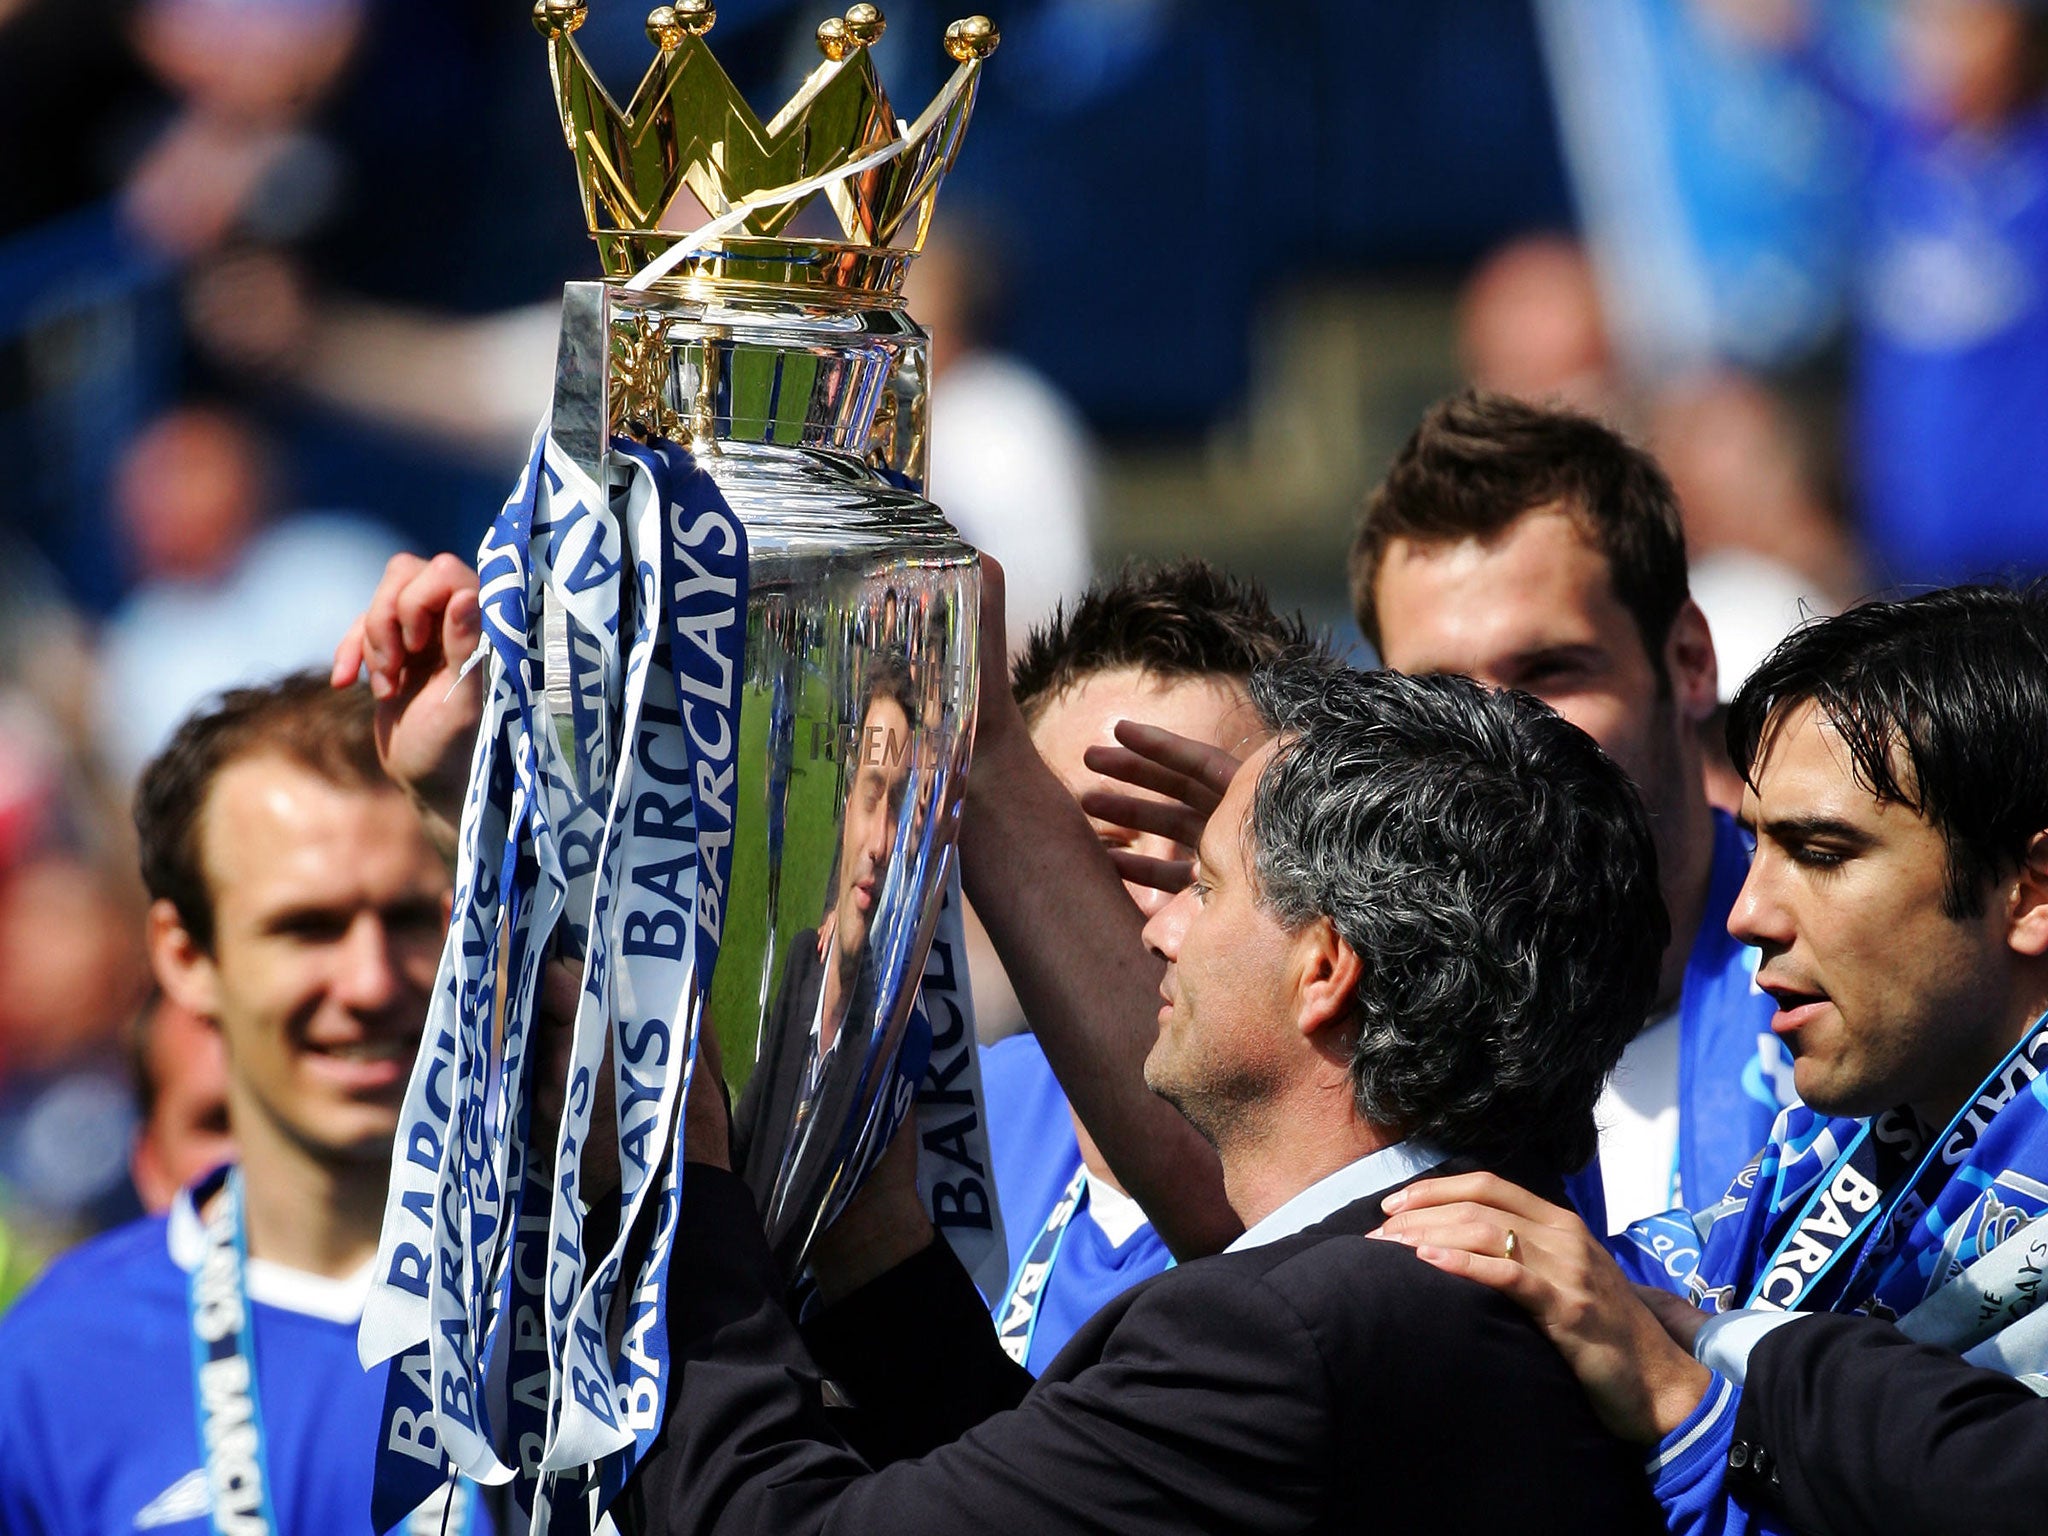 Jose Mourinho lifts the Premier League trophy in 2005